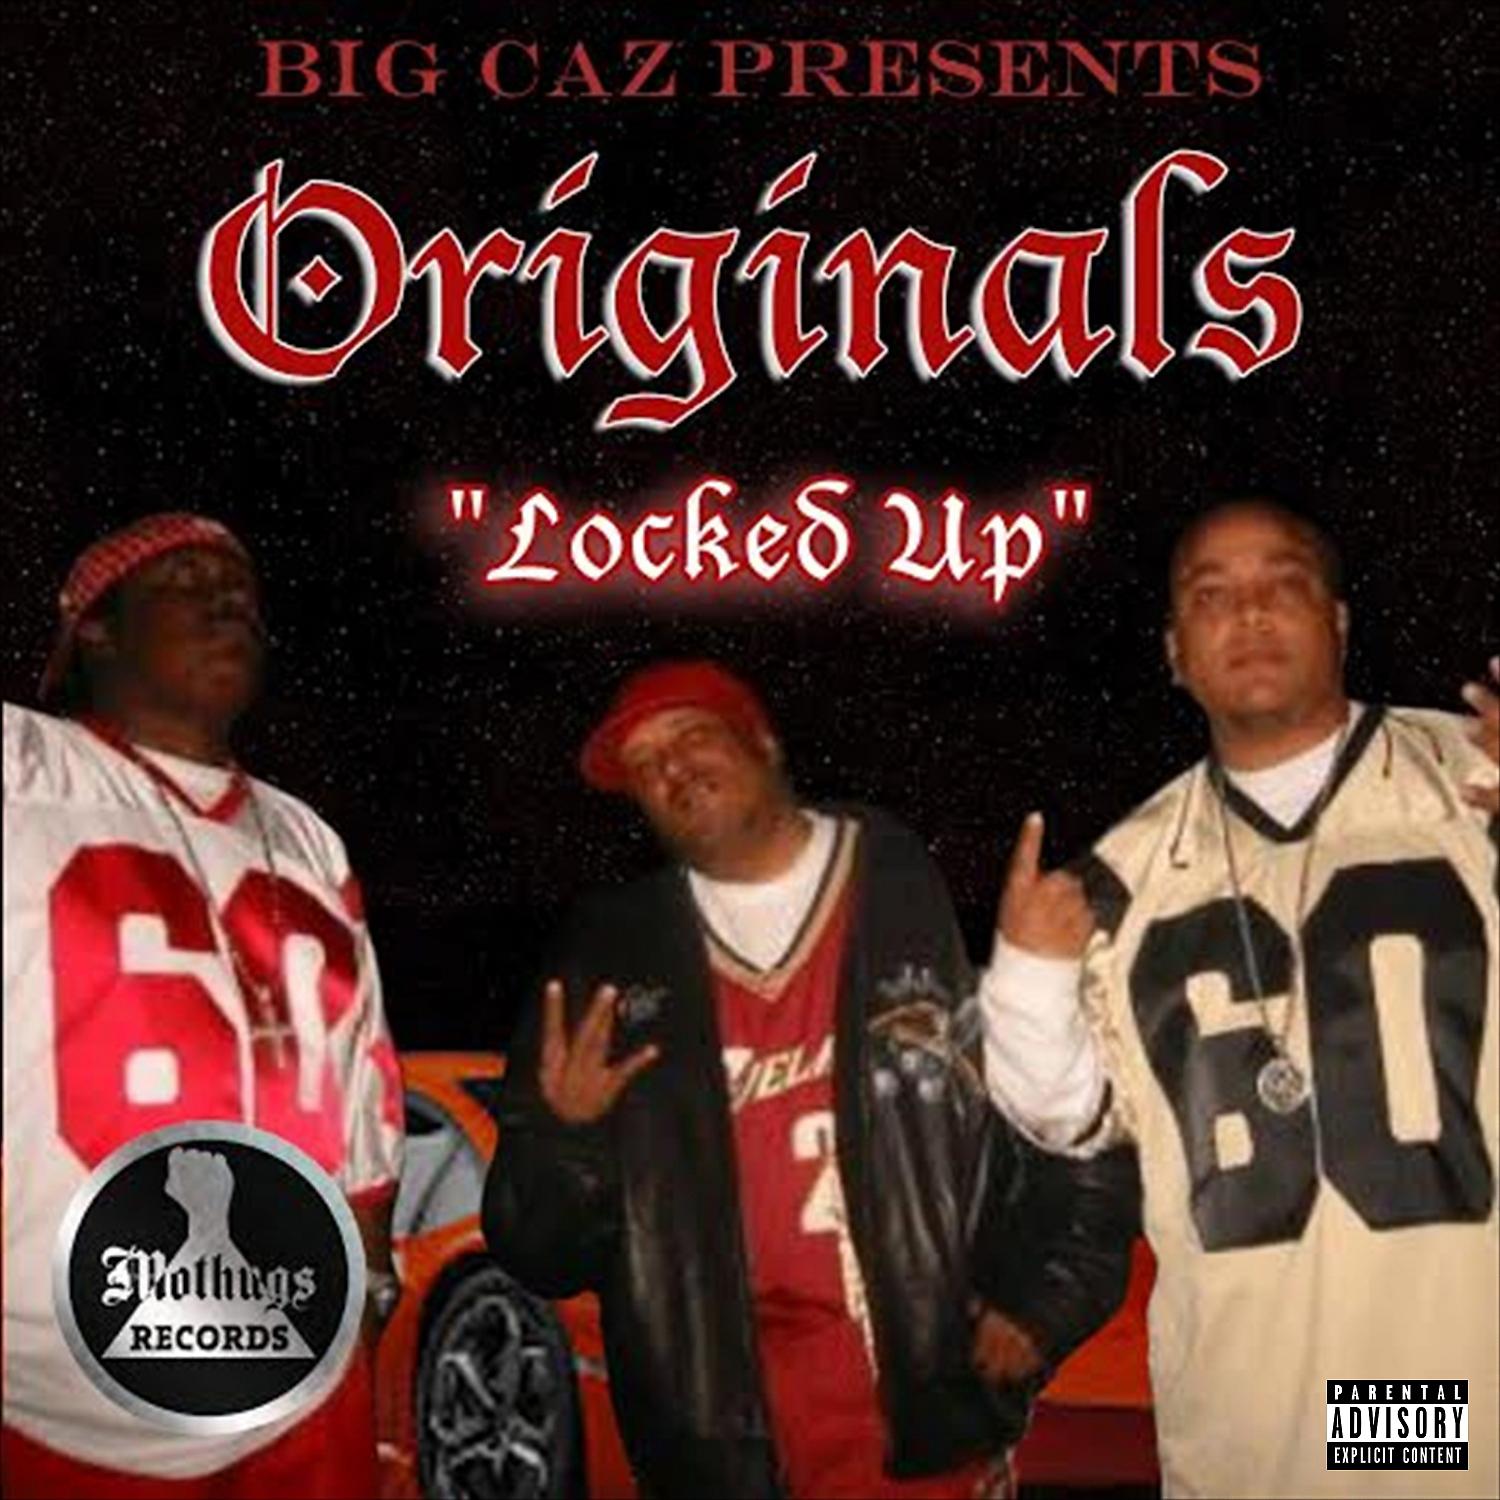 Постер альбома Big Caz Presents: Originals Locked Up